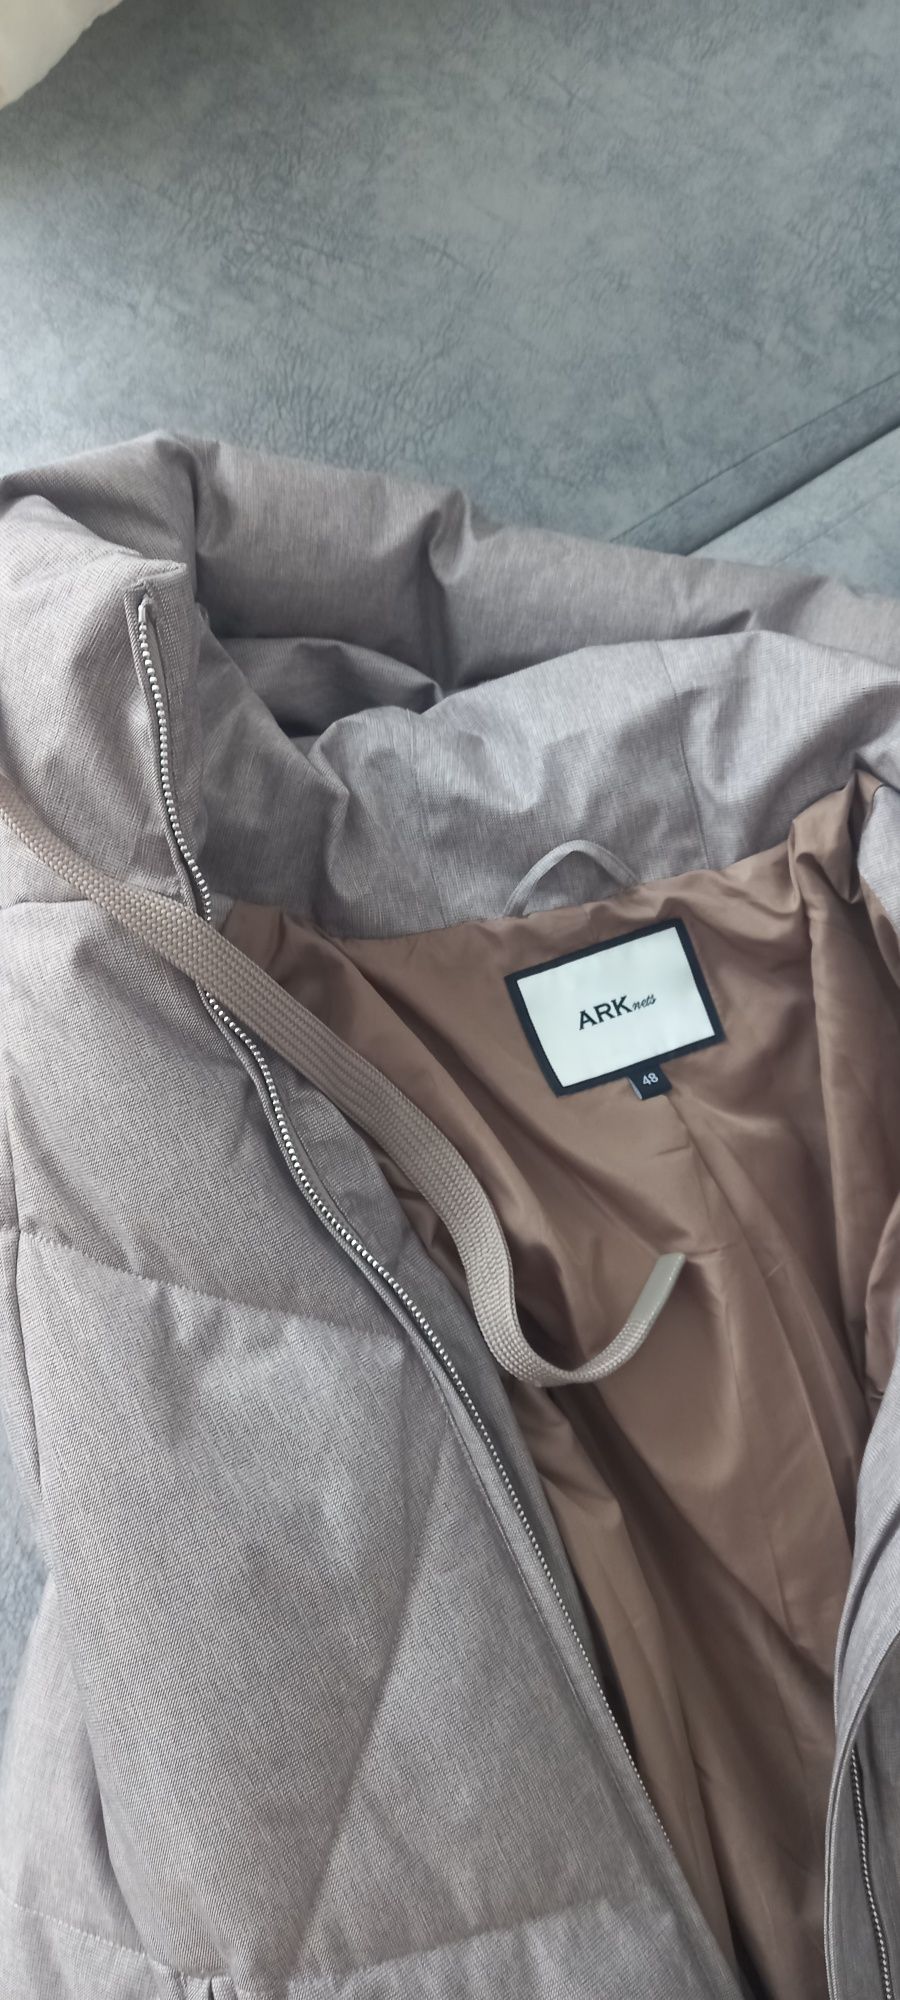 Пальто ARK nets бренд до -30, размер 48 (подойдет и на 44-46) ЗИМА